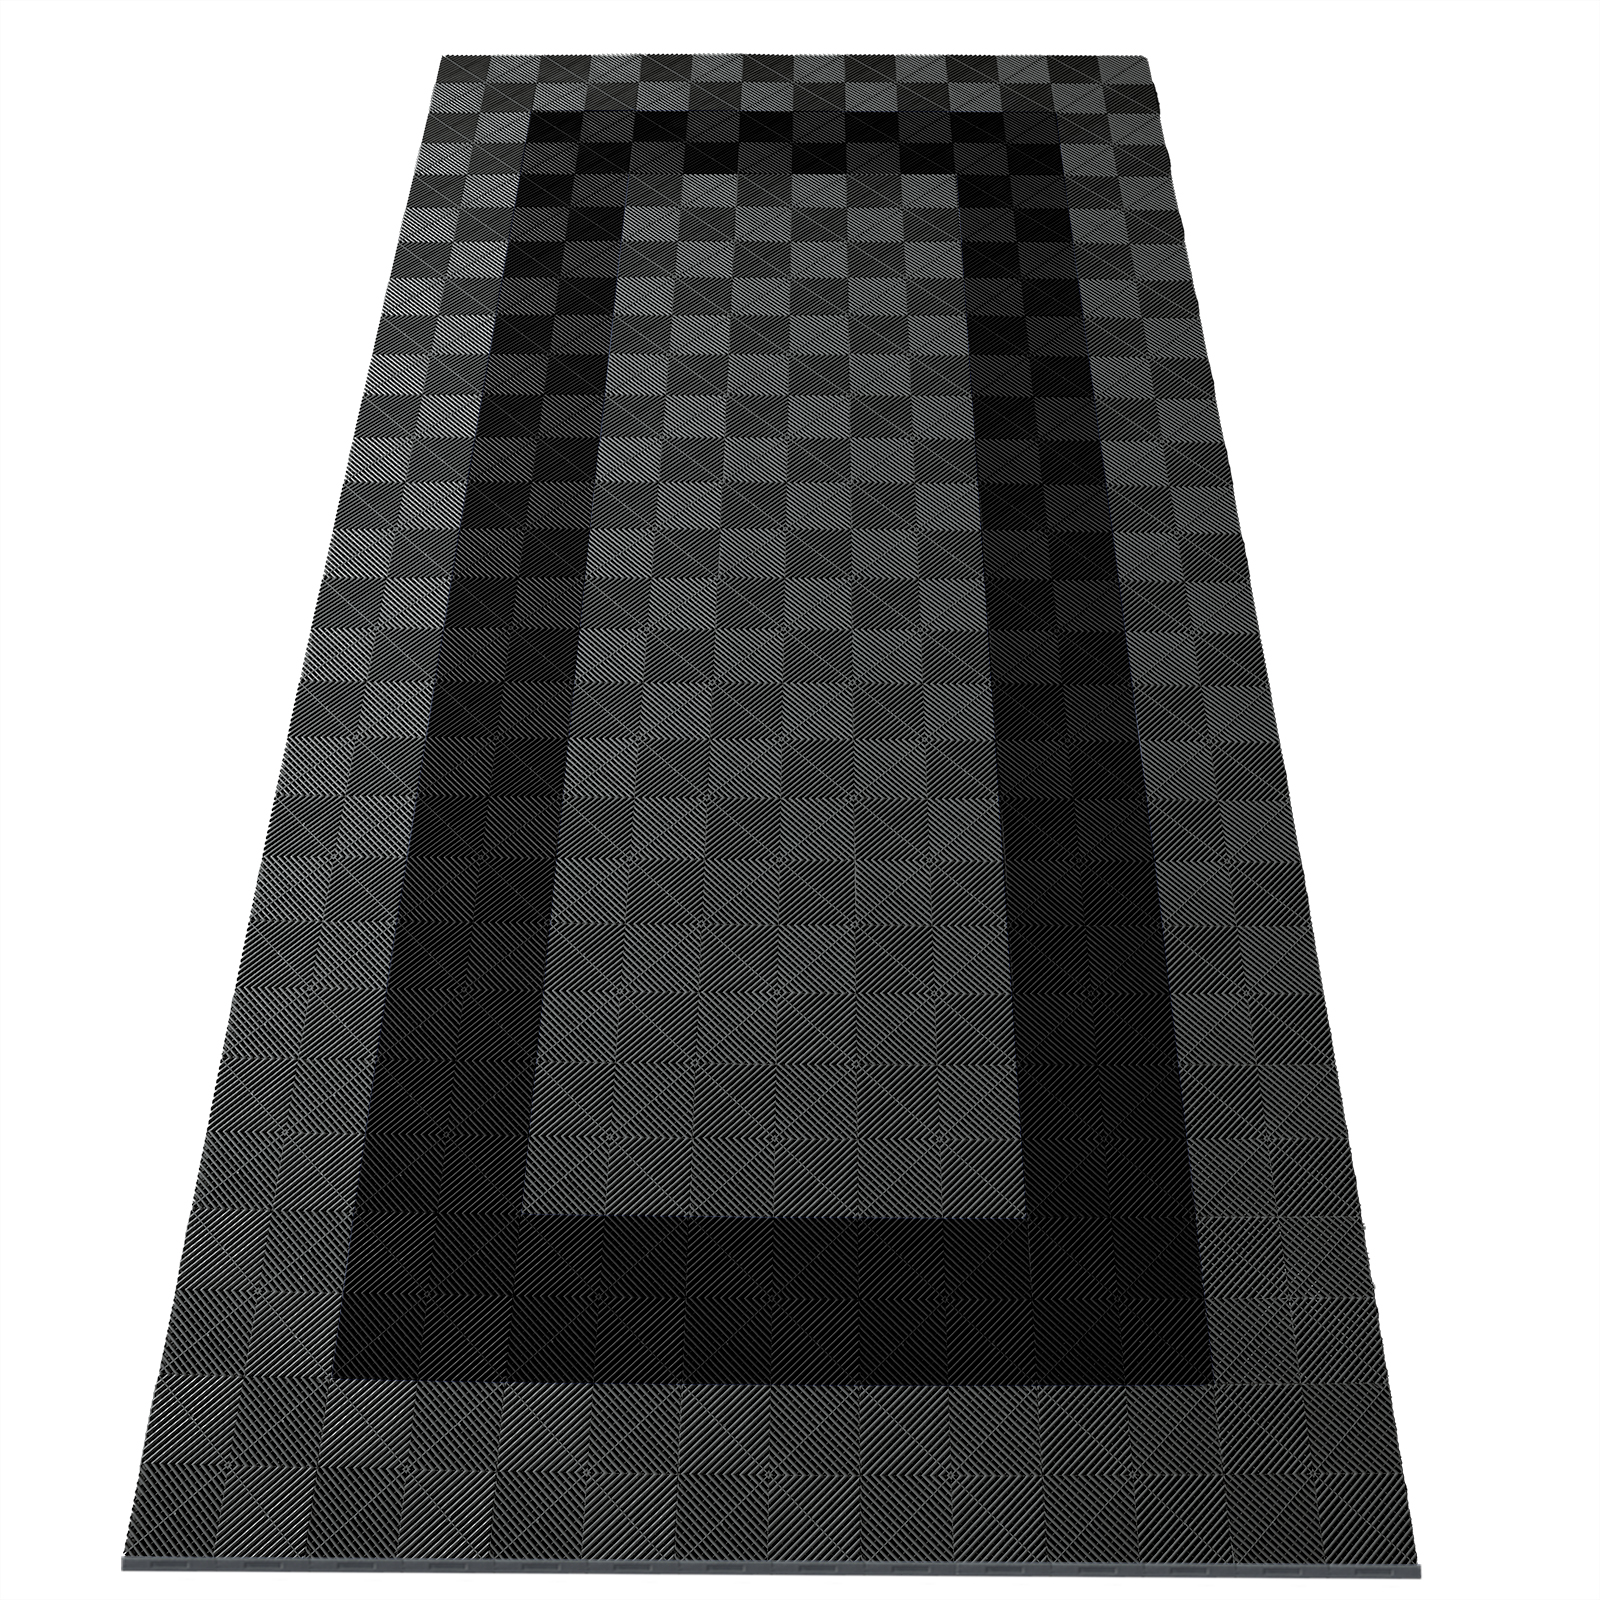 Performance Showroom Garagenboden 280cmx560cm =15,68m² Square grau schwarz